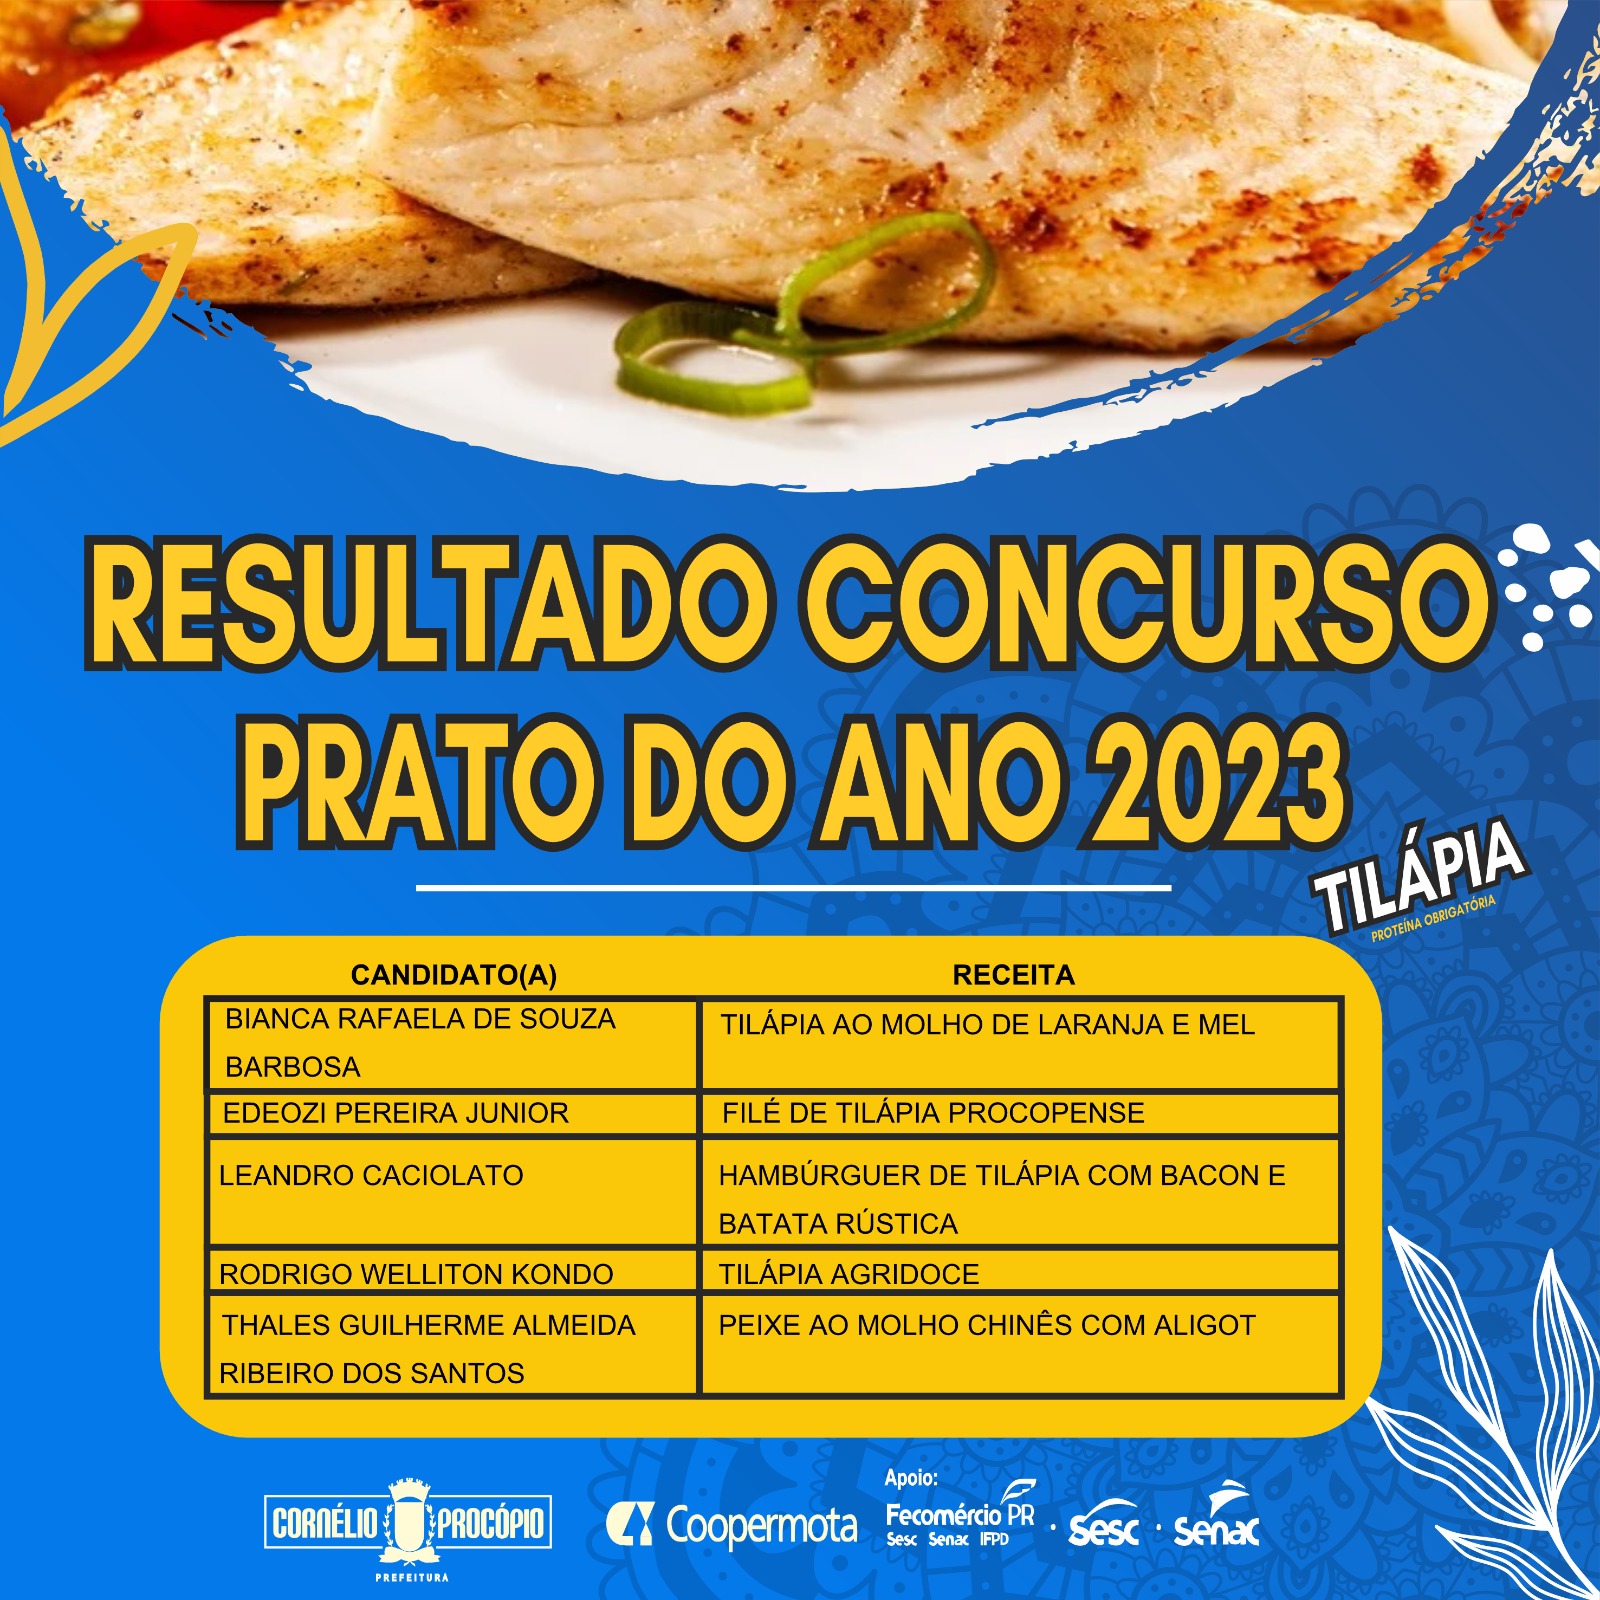 Concurso prato do ano 2023